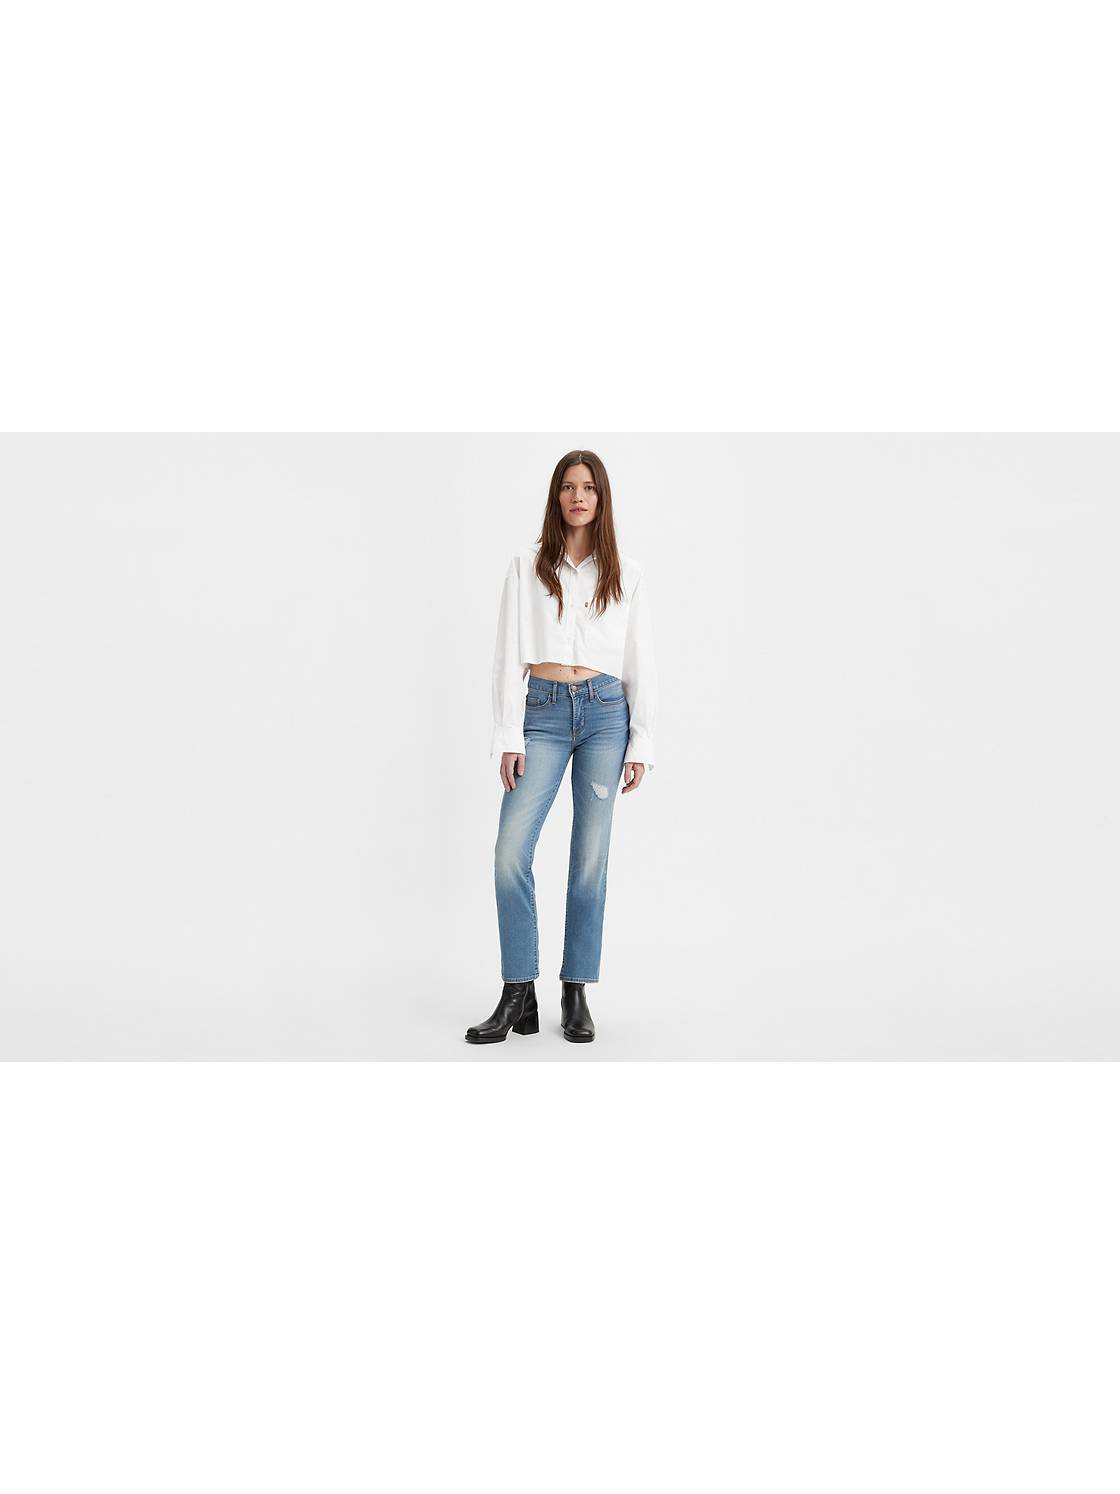 Levi's Levi 414 classic straight jeans EUC Size undefined - $25